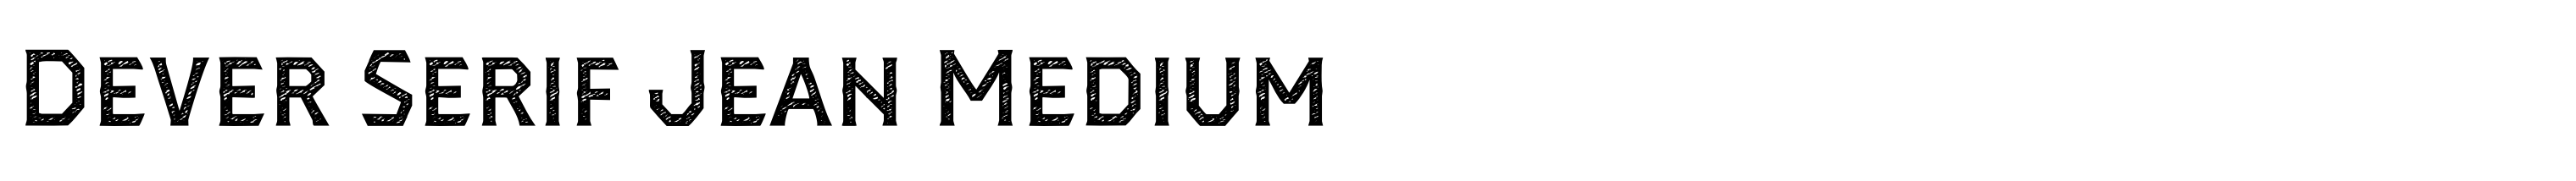 Dever Serif Jean Medium